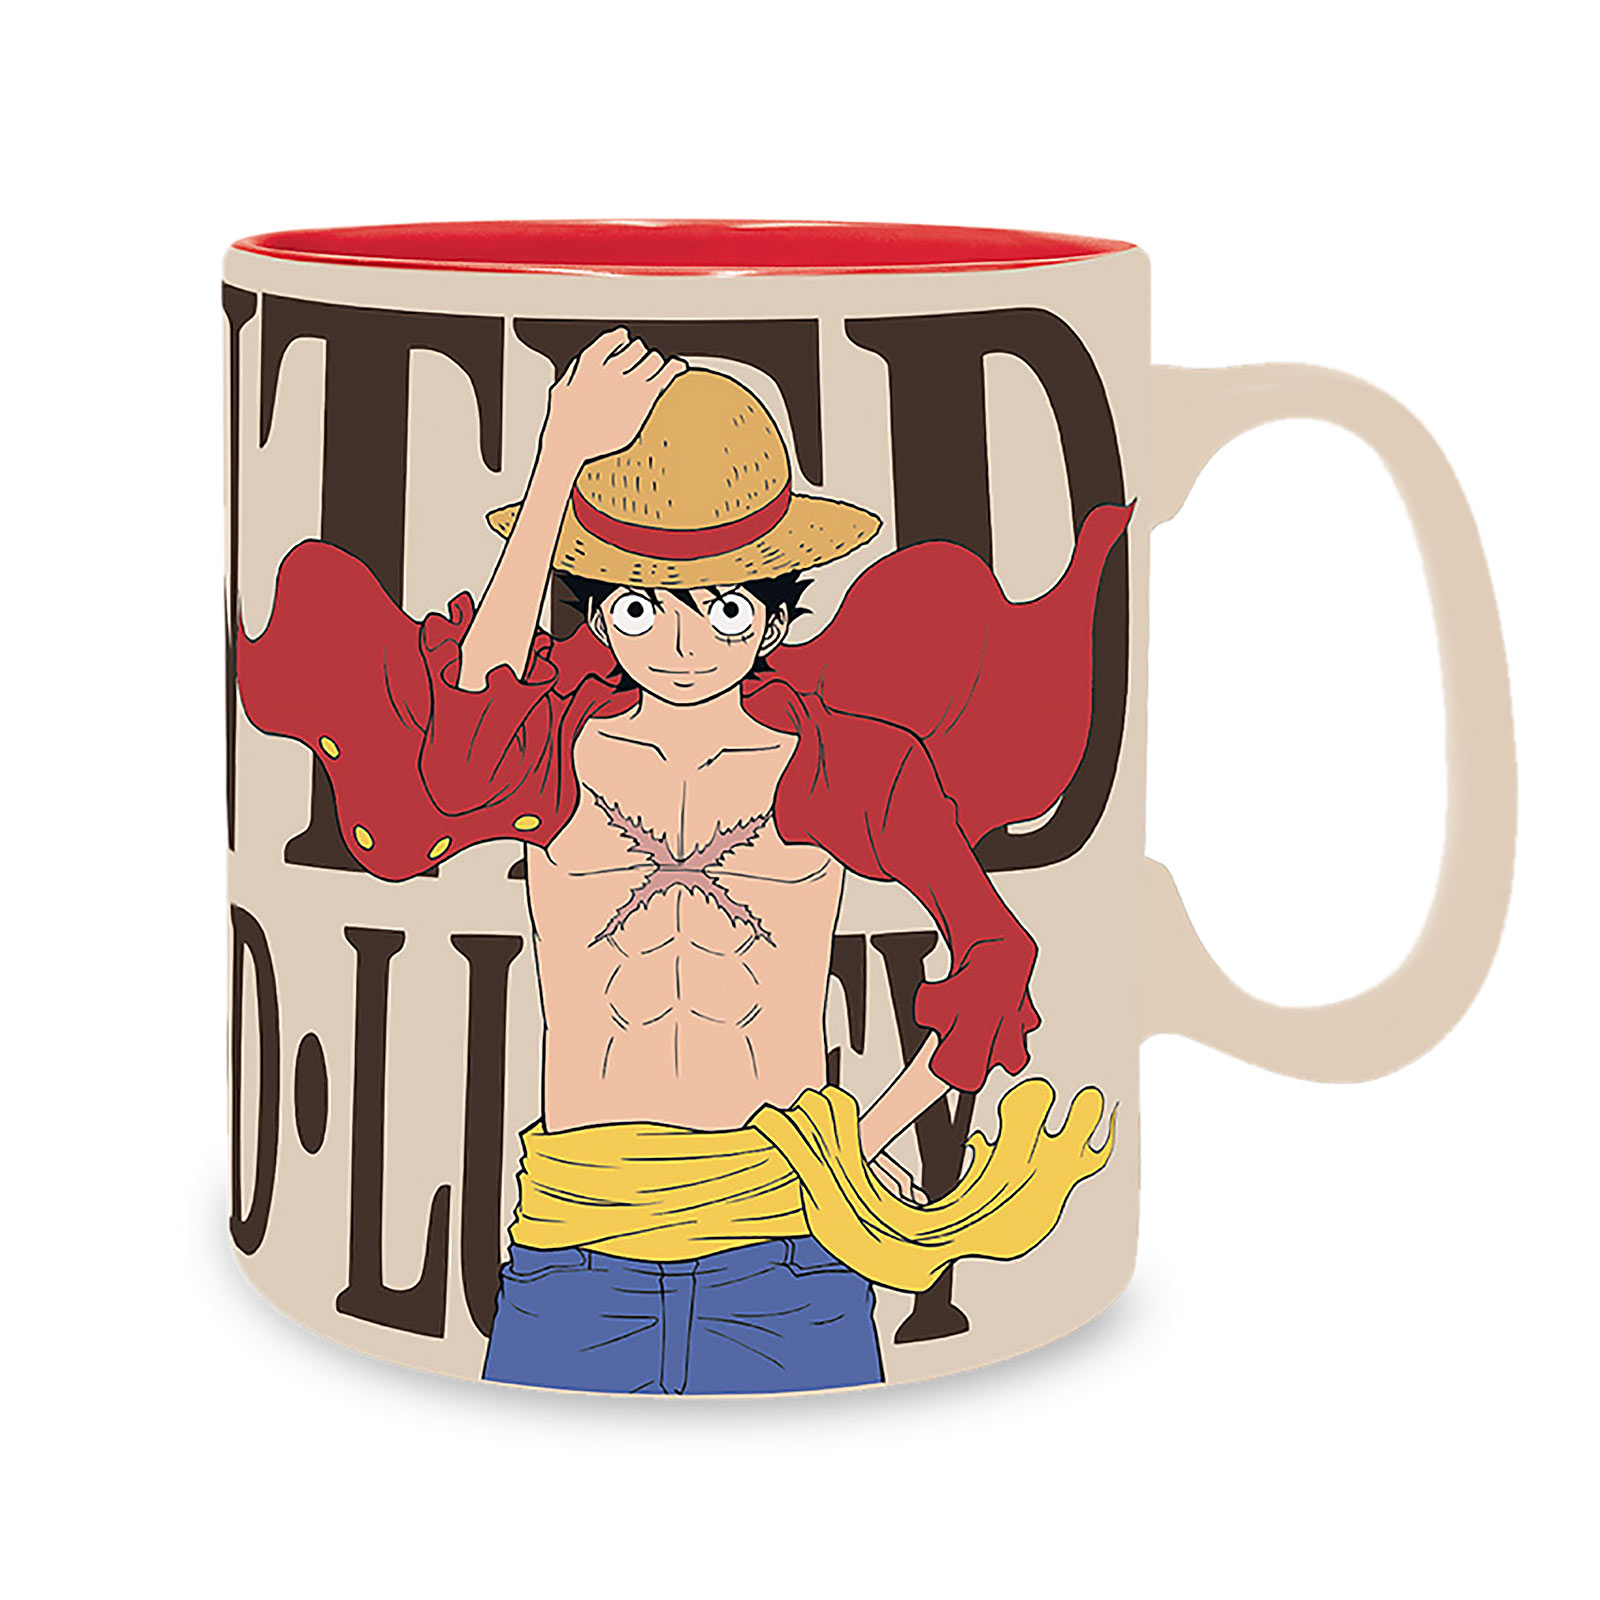 One Piece - Wanted D. Luffy Mug